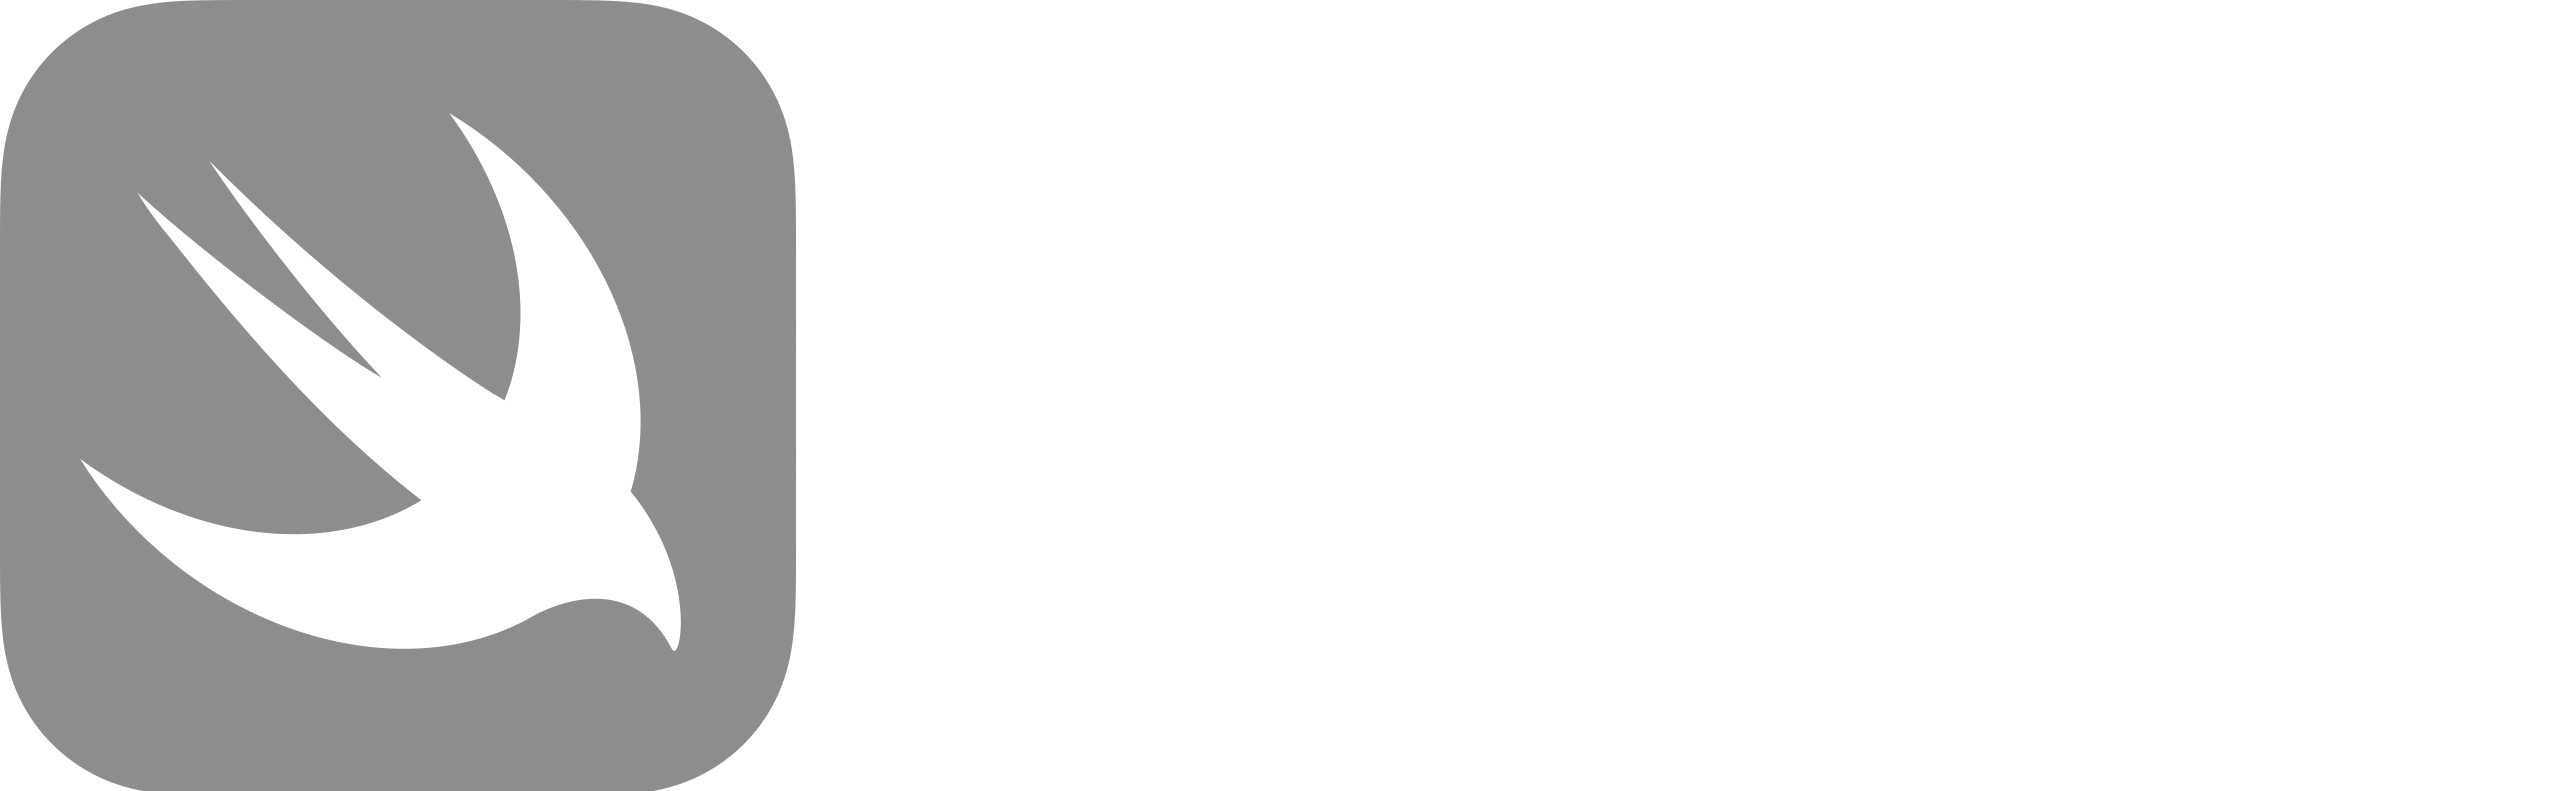 Swift_logo.svg